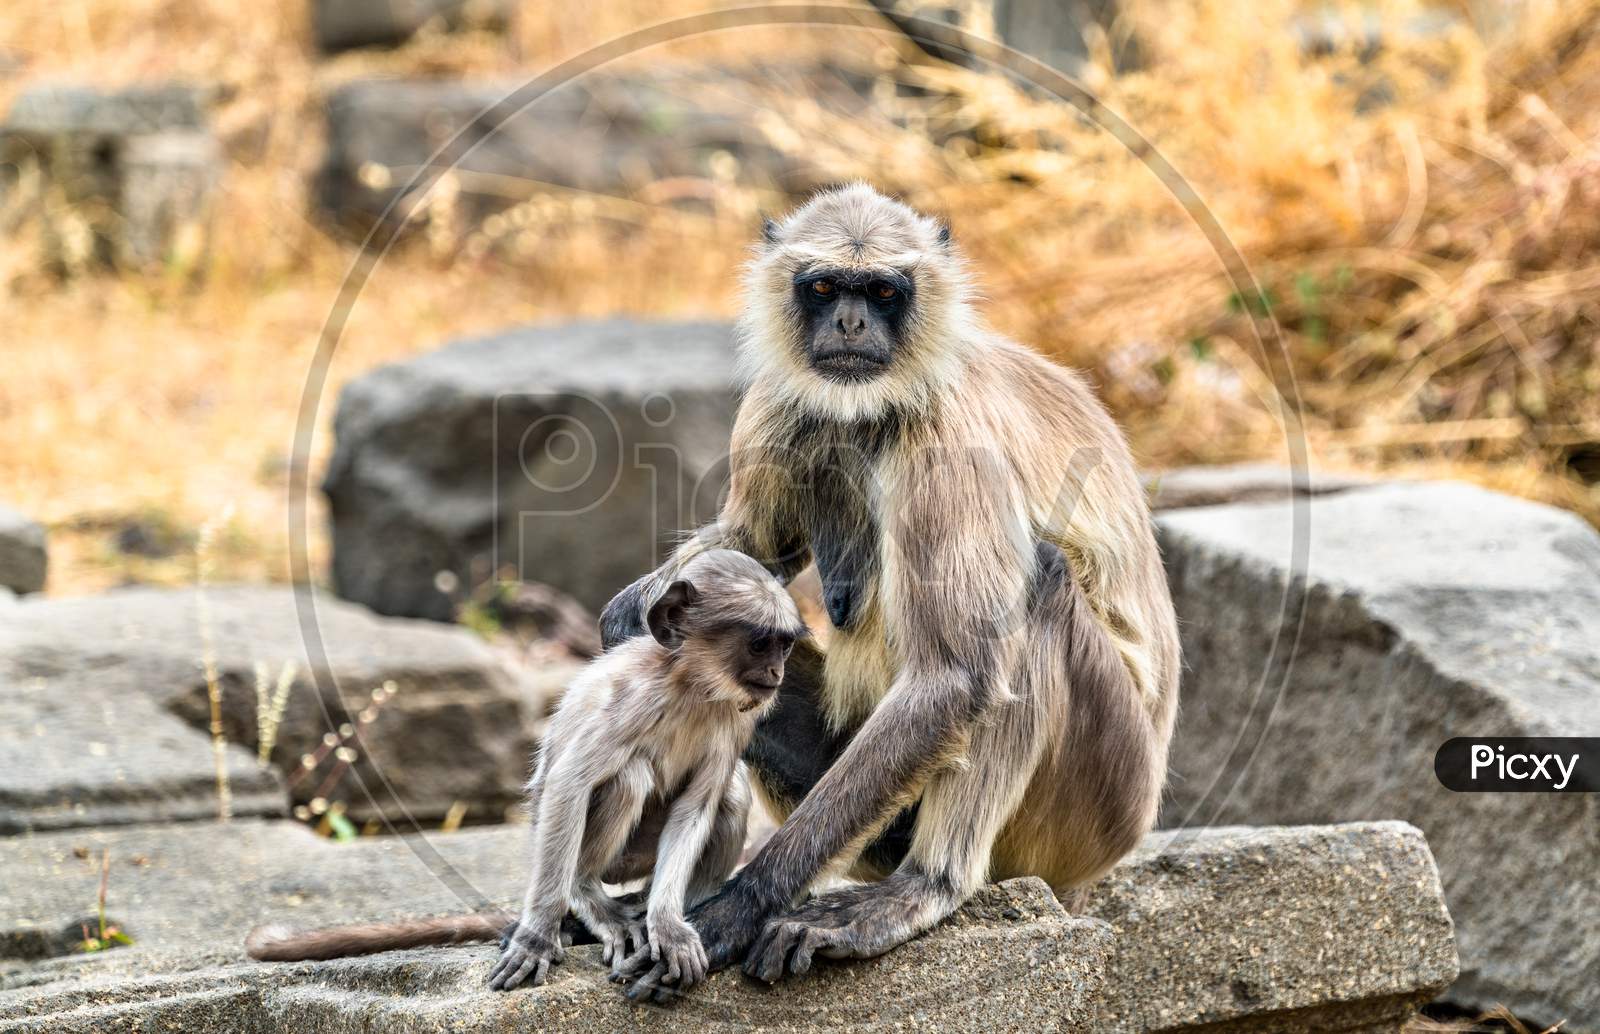 Gray Langur Monkeys At Daulatabad Fort In India